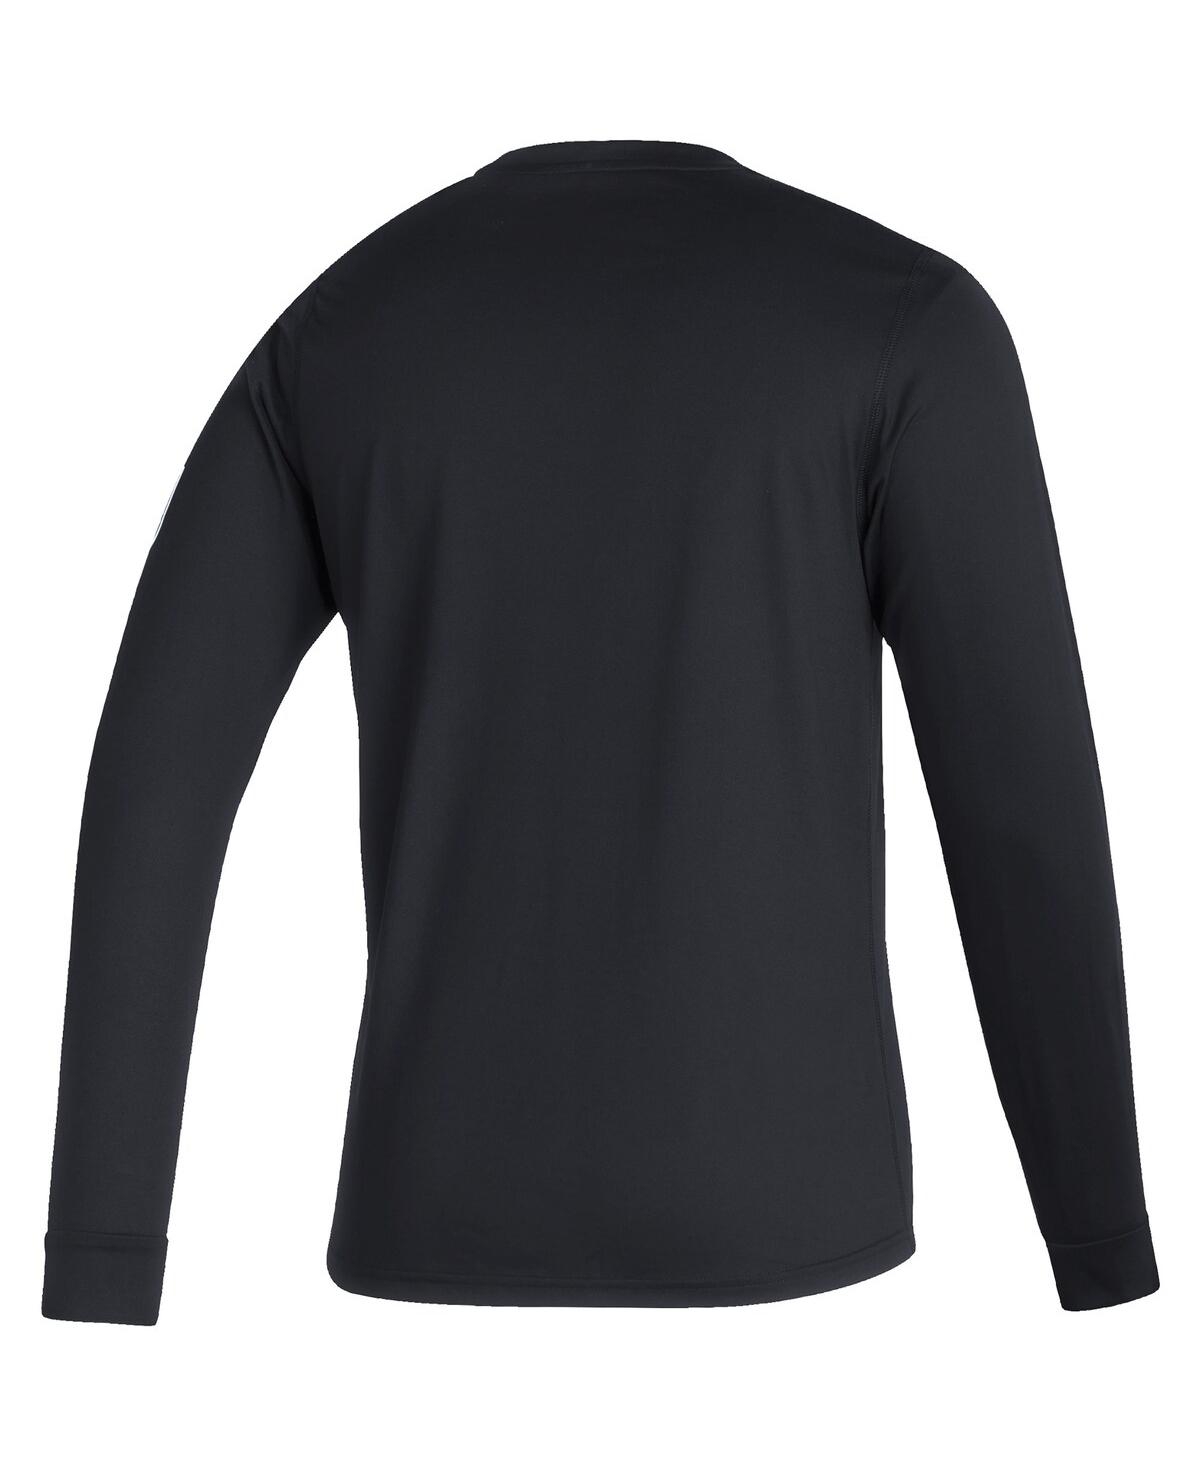 Shop Adidas Originals Men's Adidas Black San Jose Earthquakes Vintage-like Aeroready Long Sleeve T-shirt